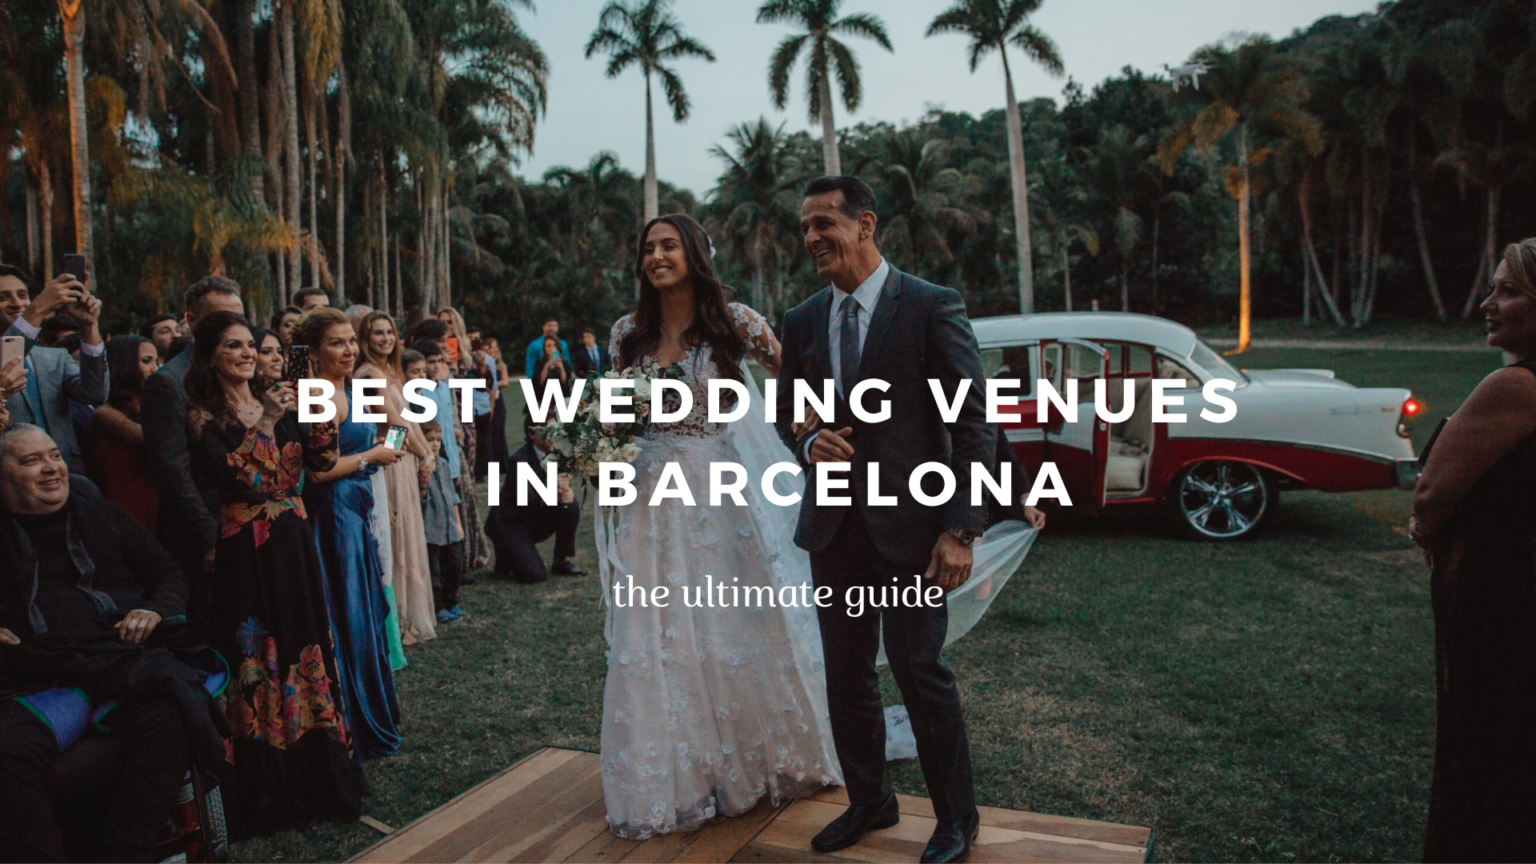 40 TOP WEDDING VENUES IN BARCELONA - GUIDE by SuperWeddings